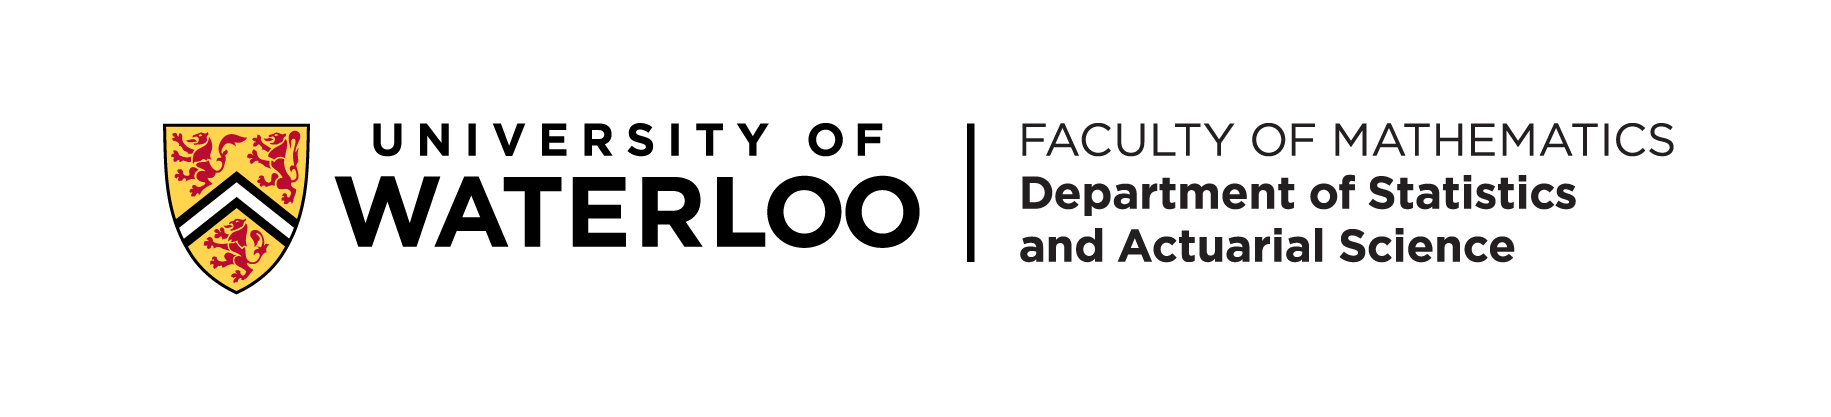 University of Waterloo Math Faculty logo